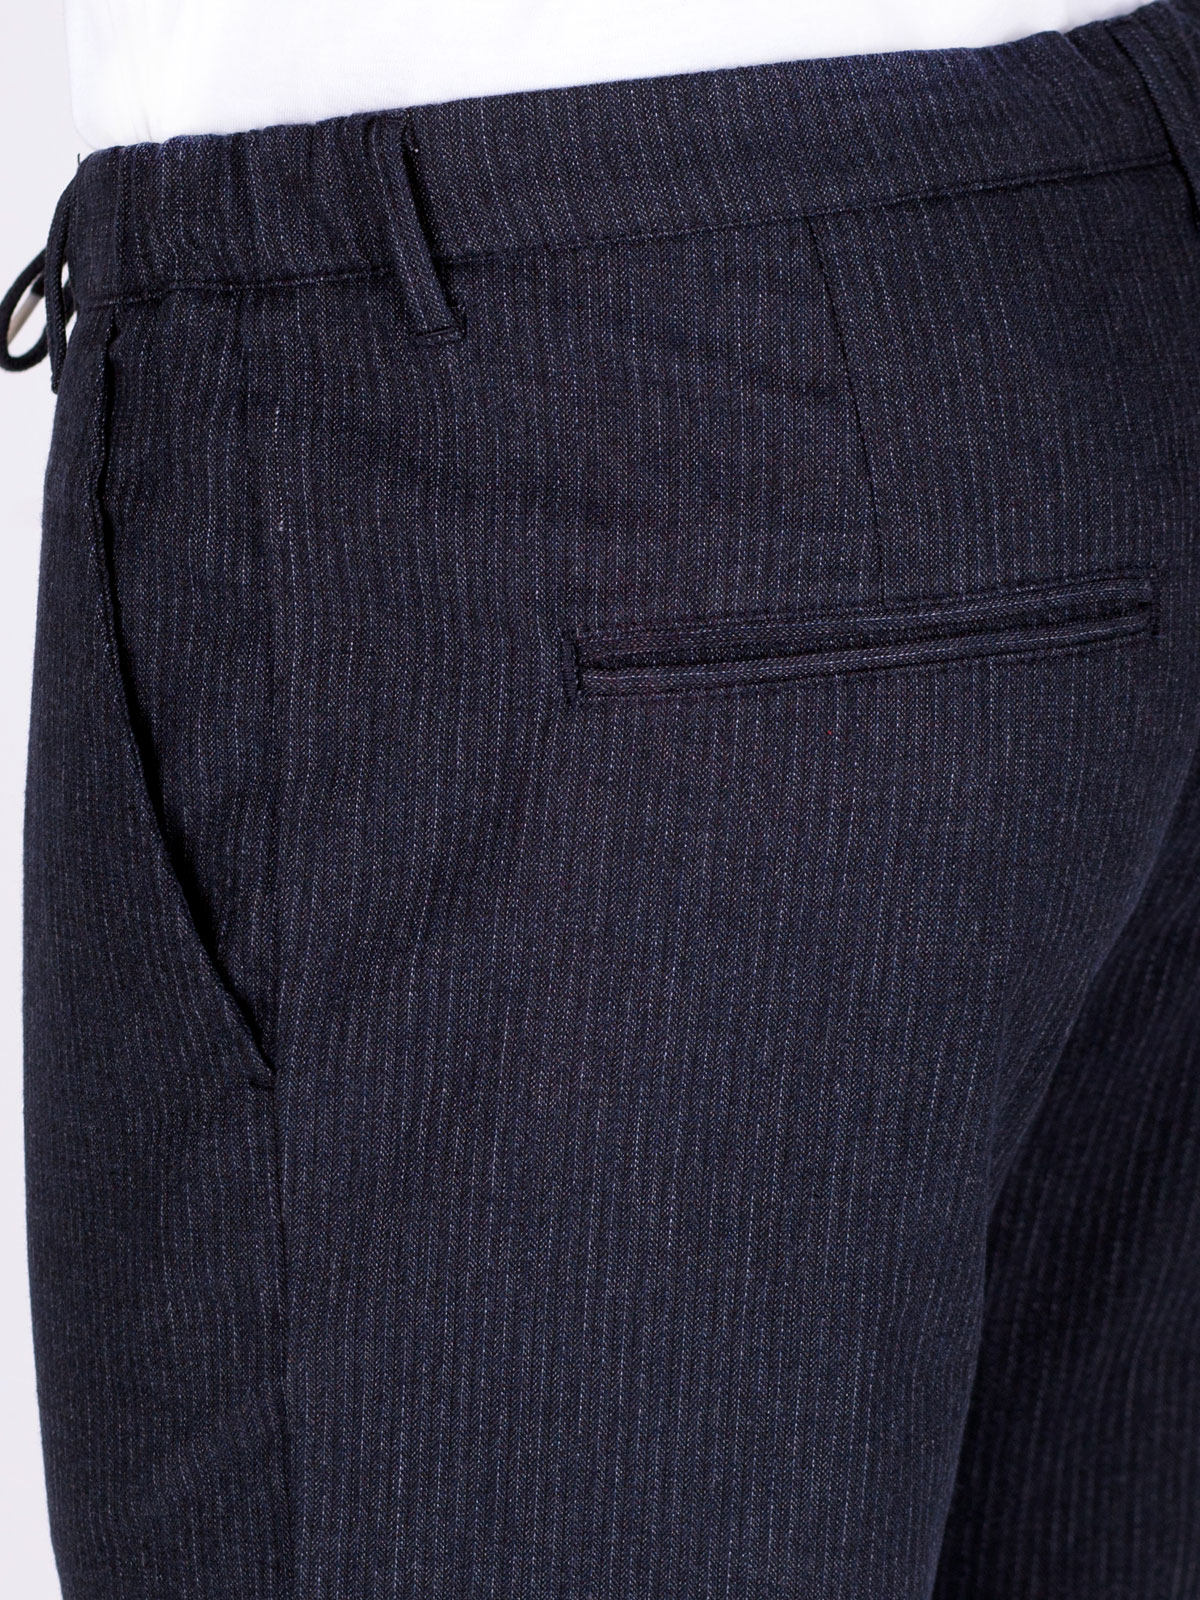 Pantaloni cu dungi albastre cu sireturi - 60283 € 66.93 img4